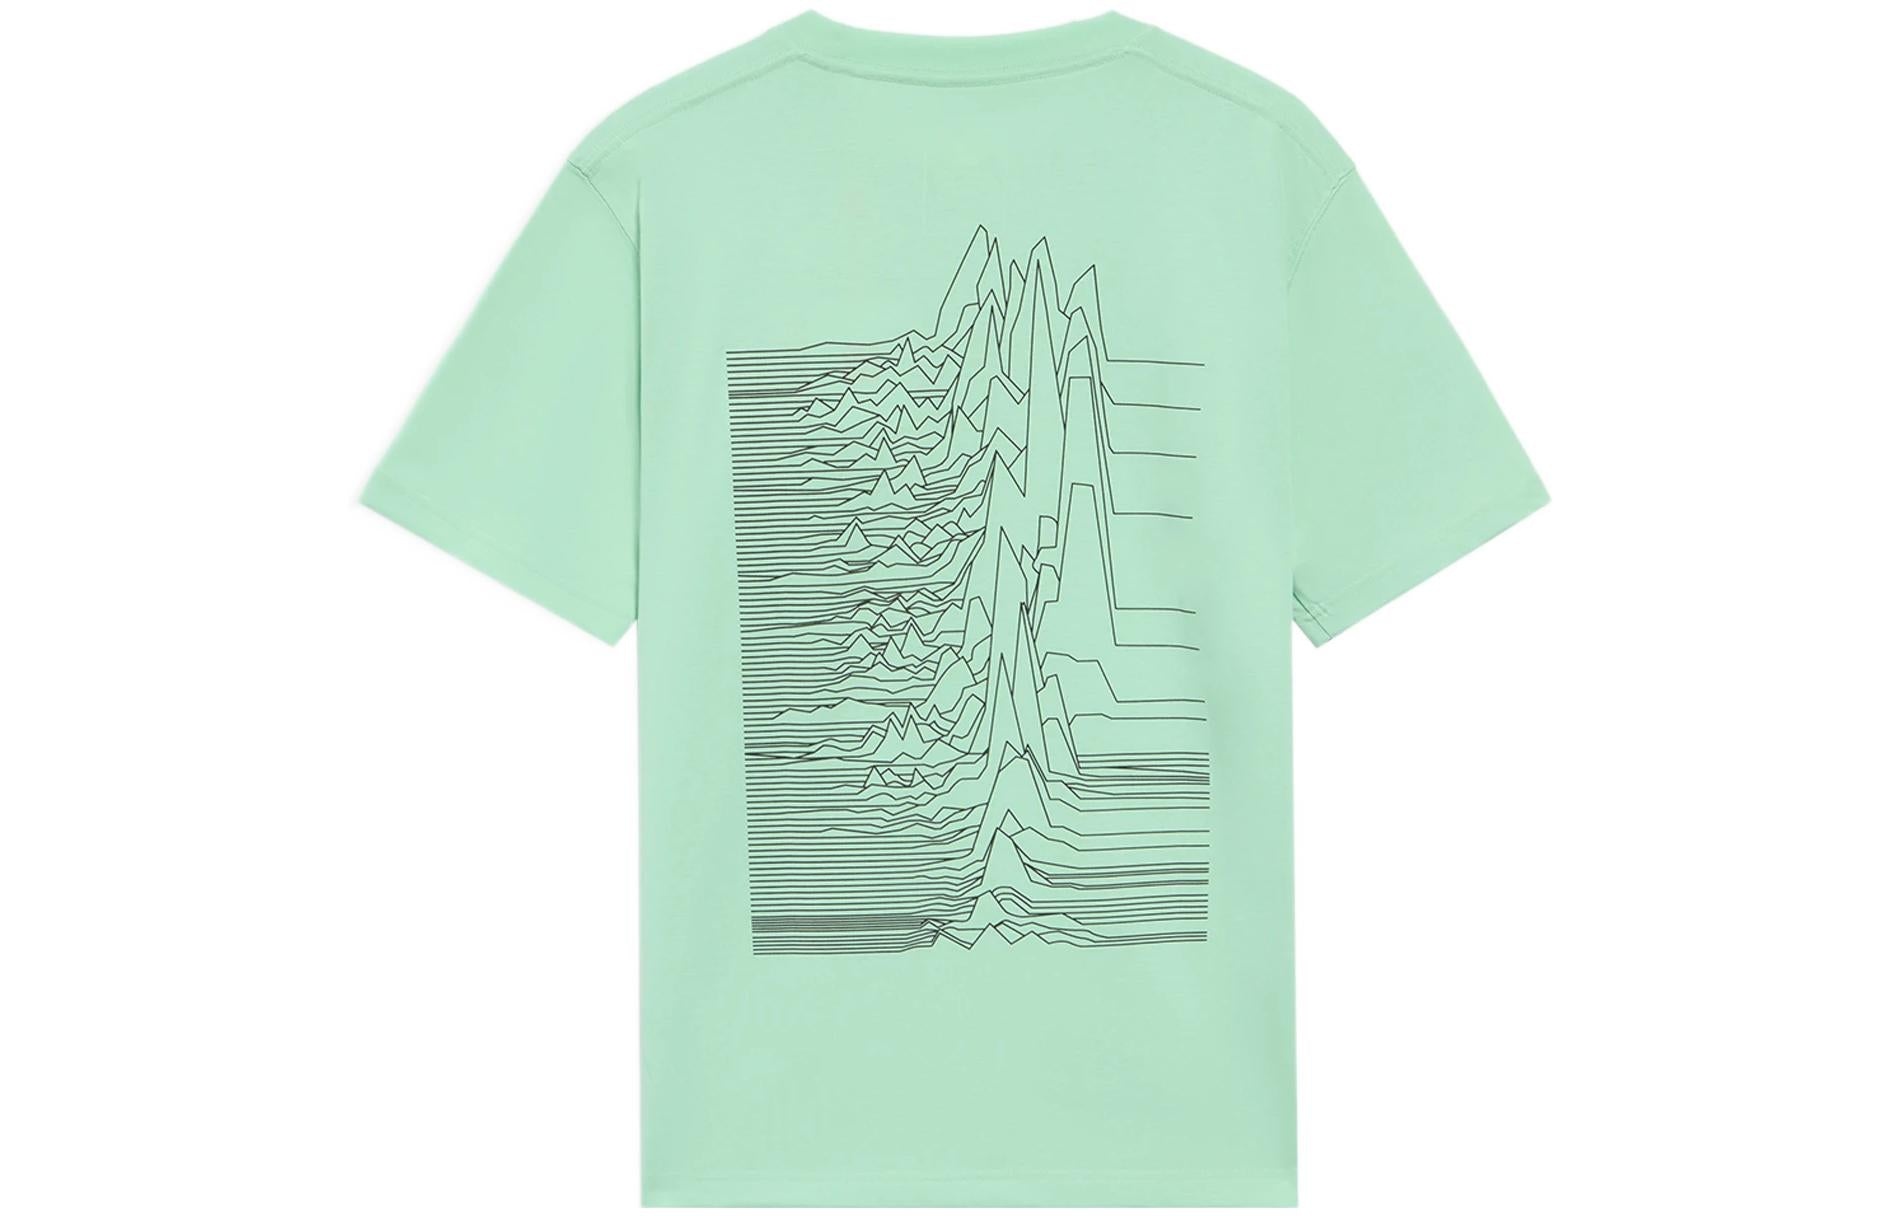 Li-Ning Mountain Graphic T-shirt 'Light Green' AHSS136-3 - 2